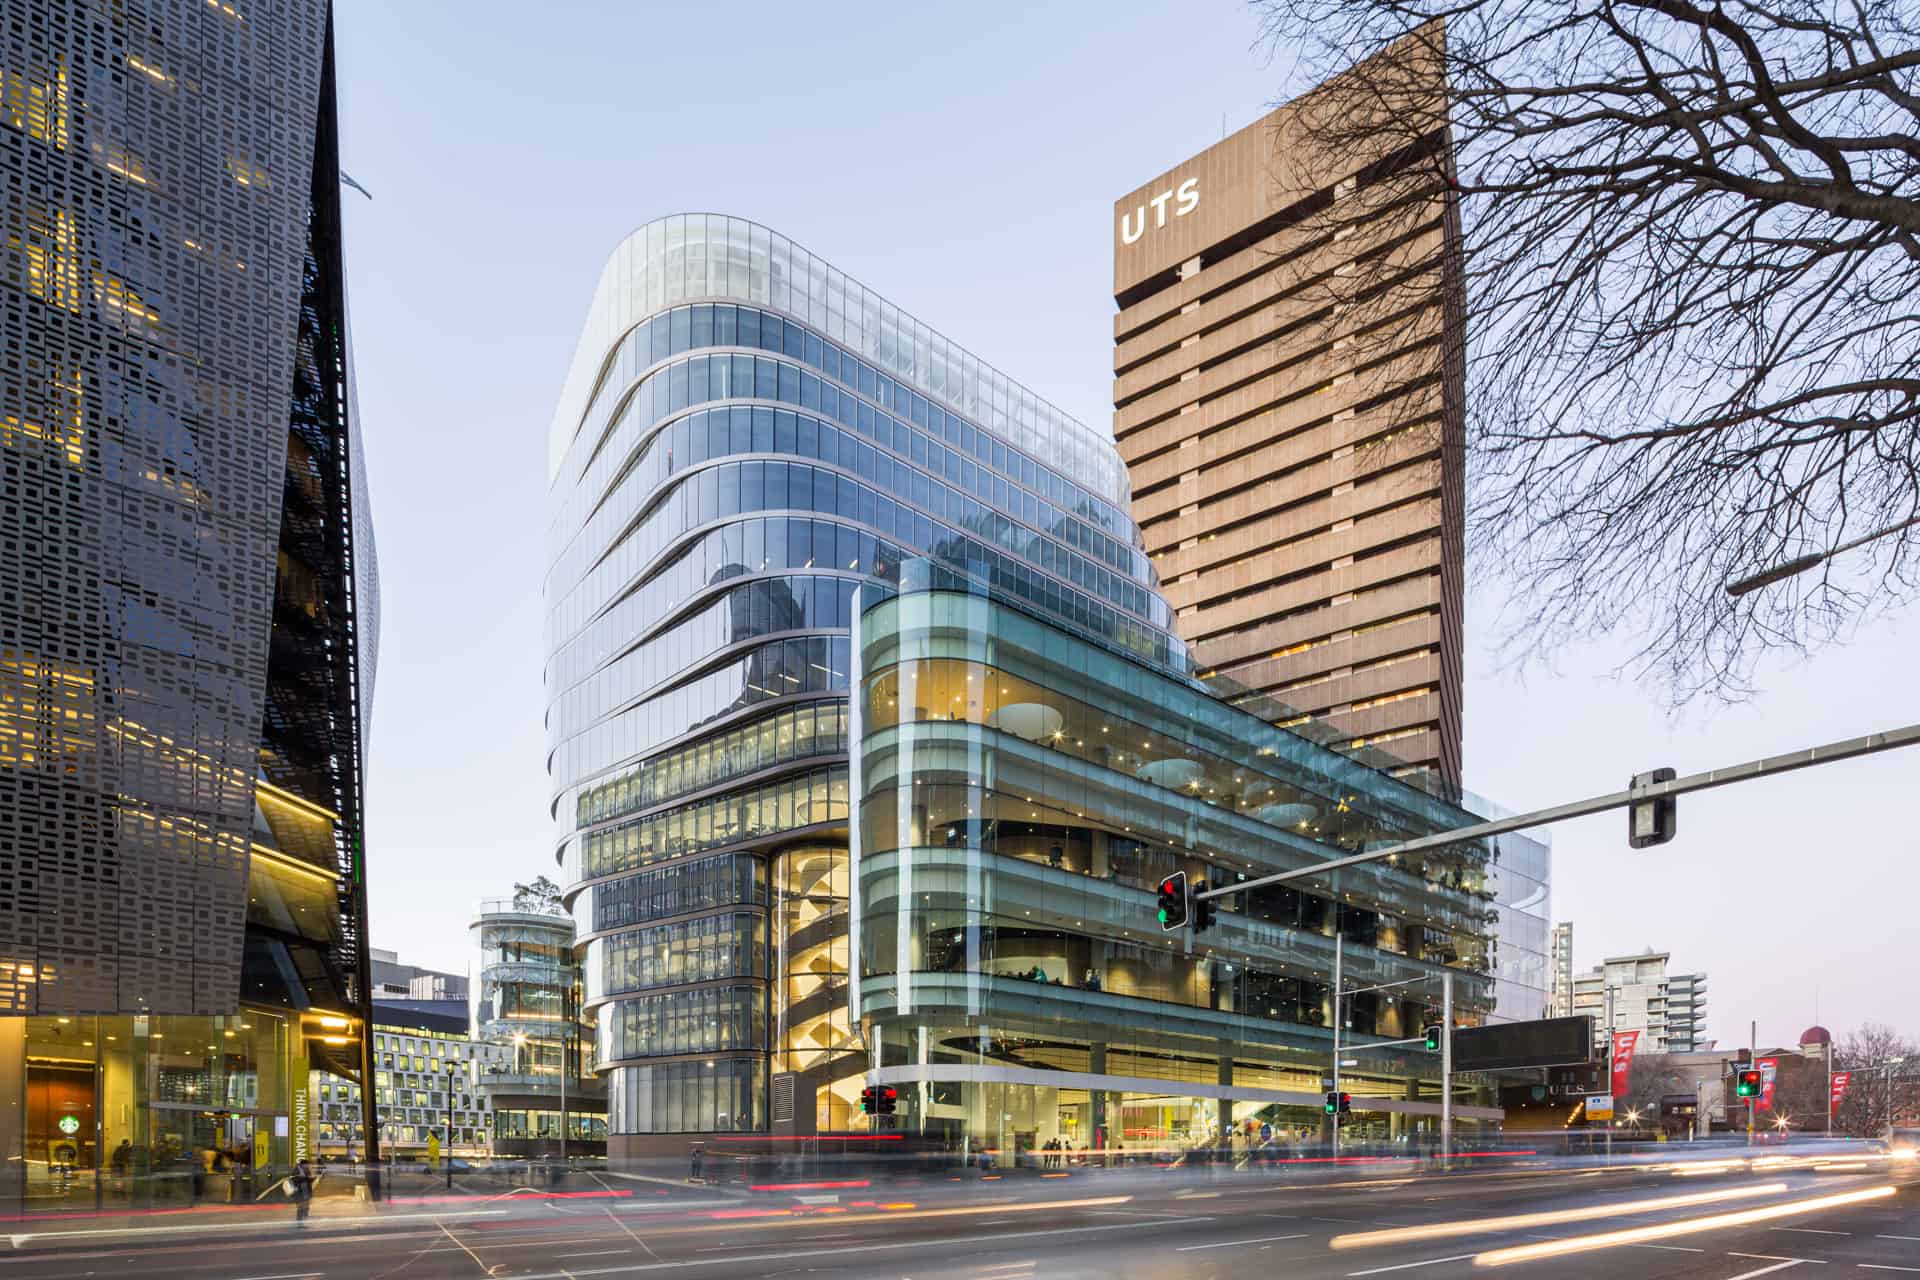 University of Technology Sydney's main building; a futuristic glass building with a slight upward curve on an urban street corner.